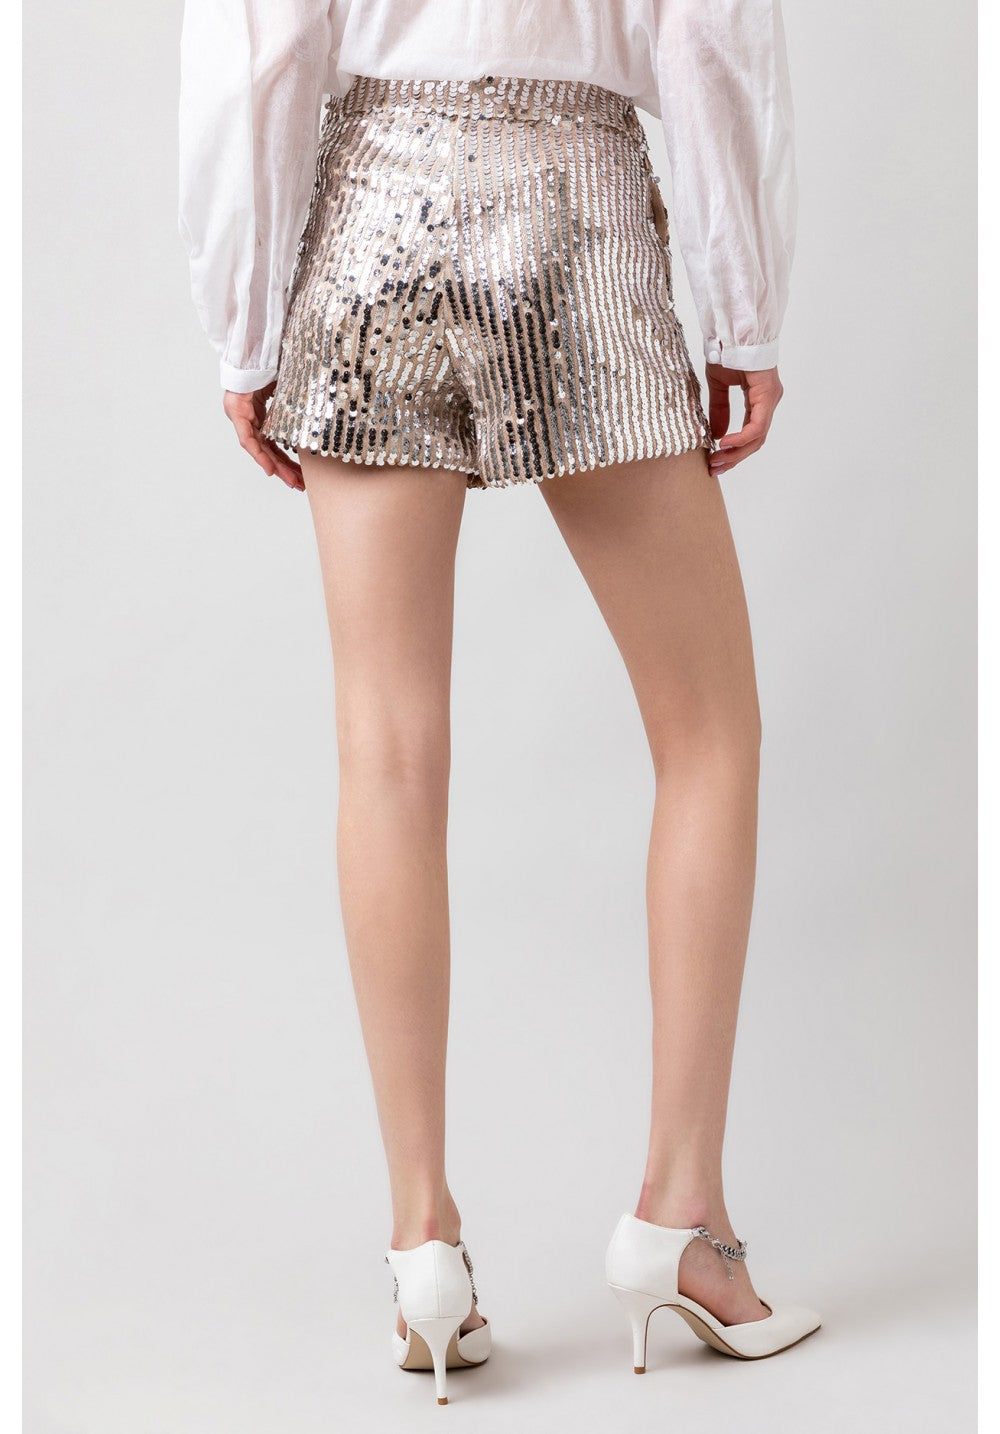 Gold Sequins Shorts